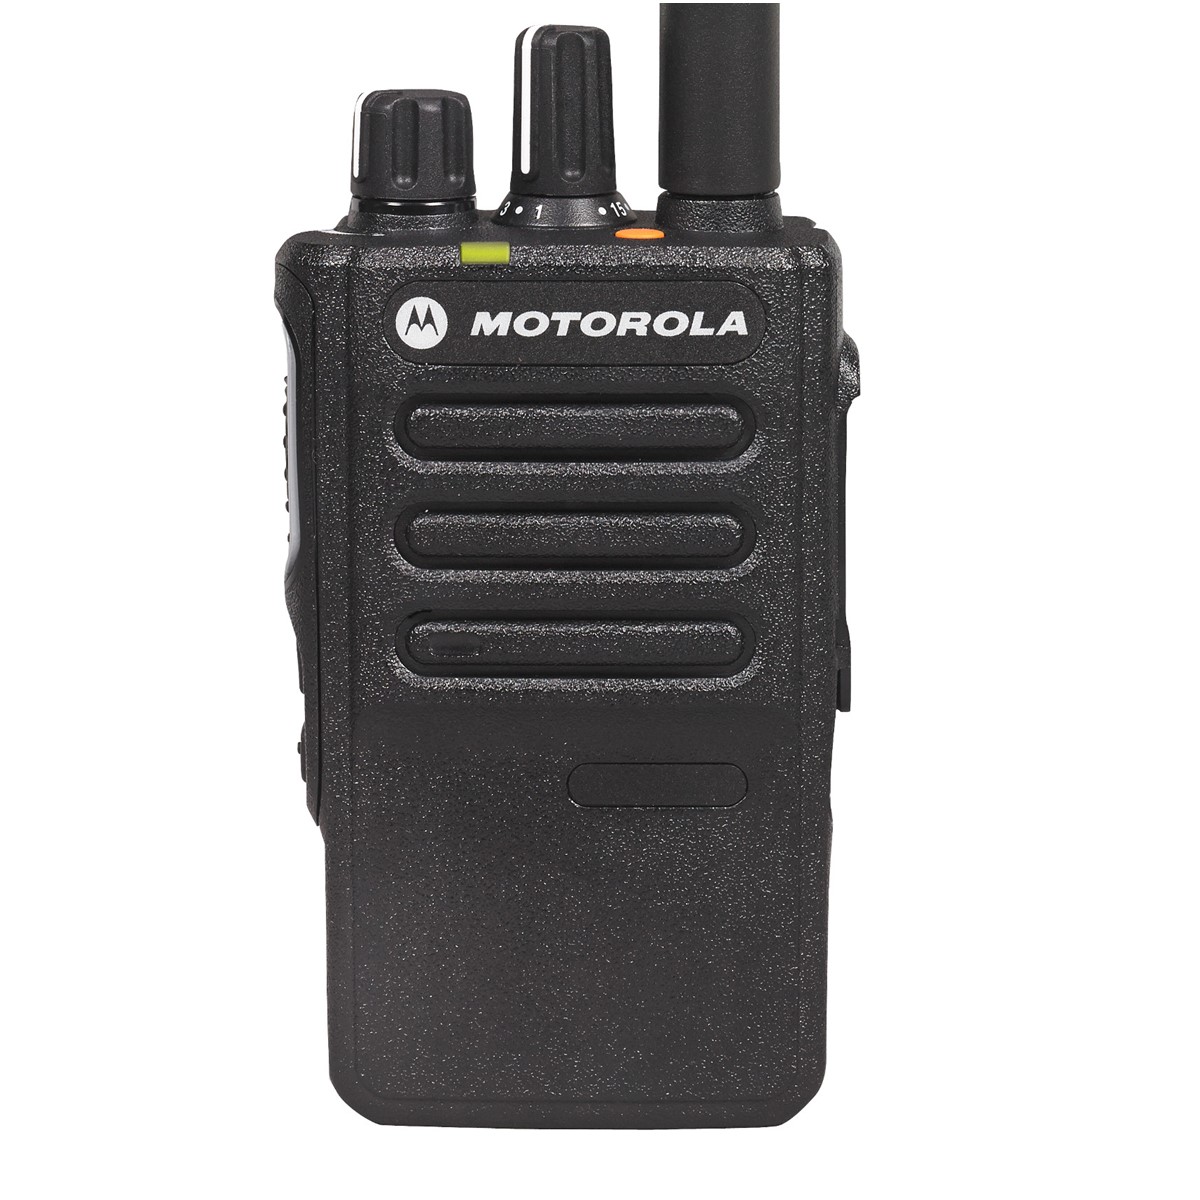 Radio Motorola DGP8050e Elite Digital LAH69JDC9RA1AN VHF 136-174 MHz